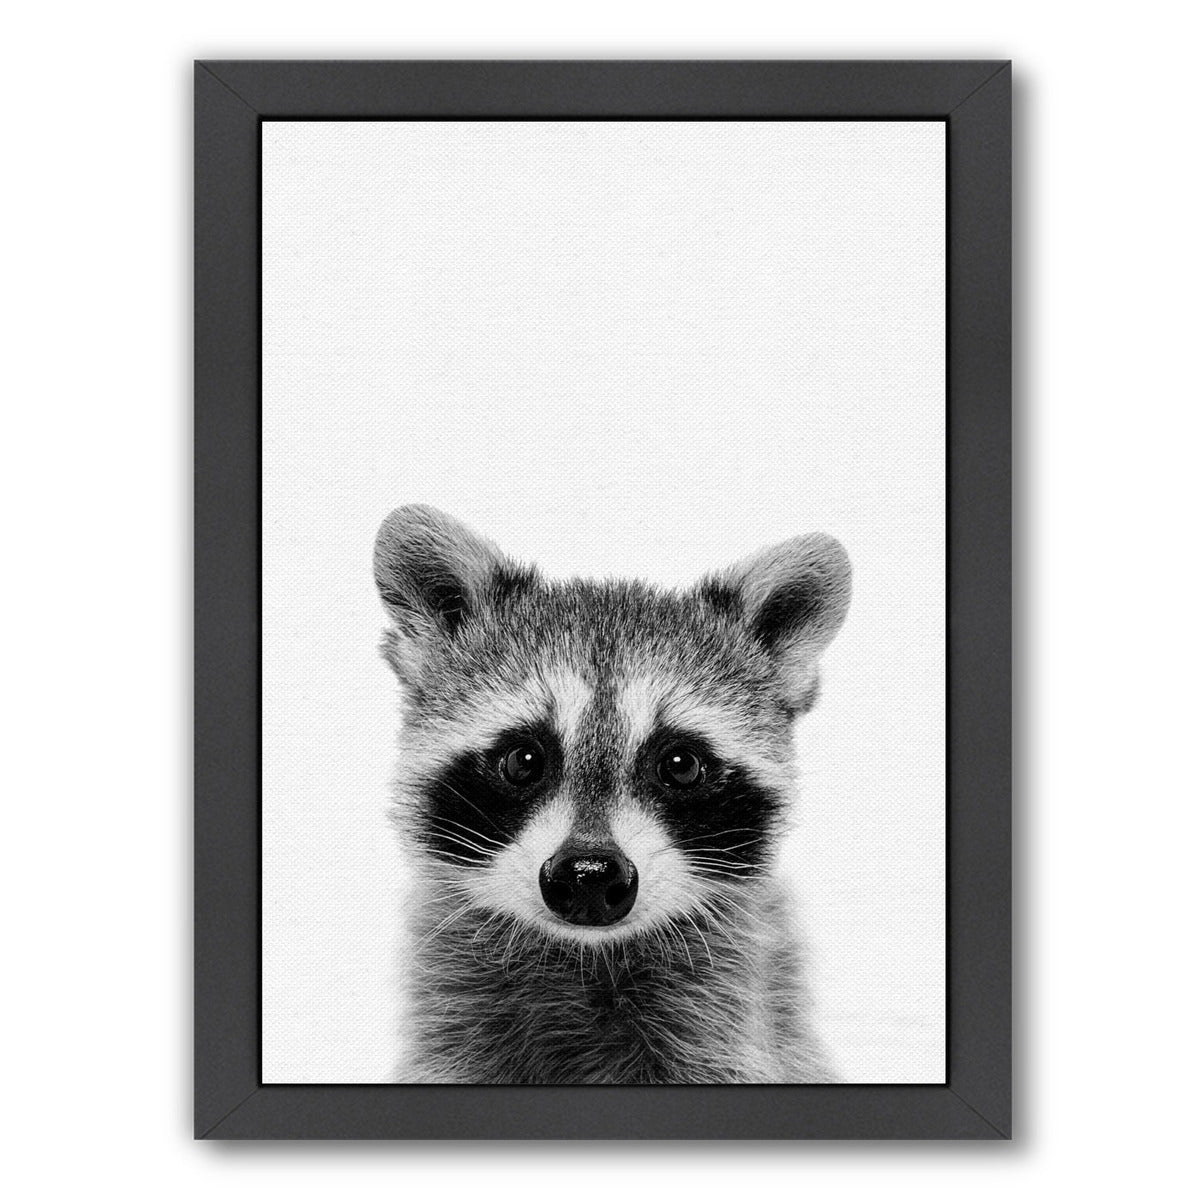 Raccoon By Nuada-Black Framed Print - Wall Art - Americanflat